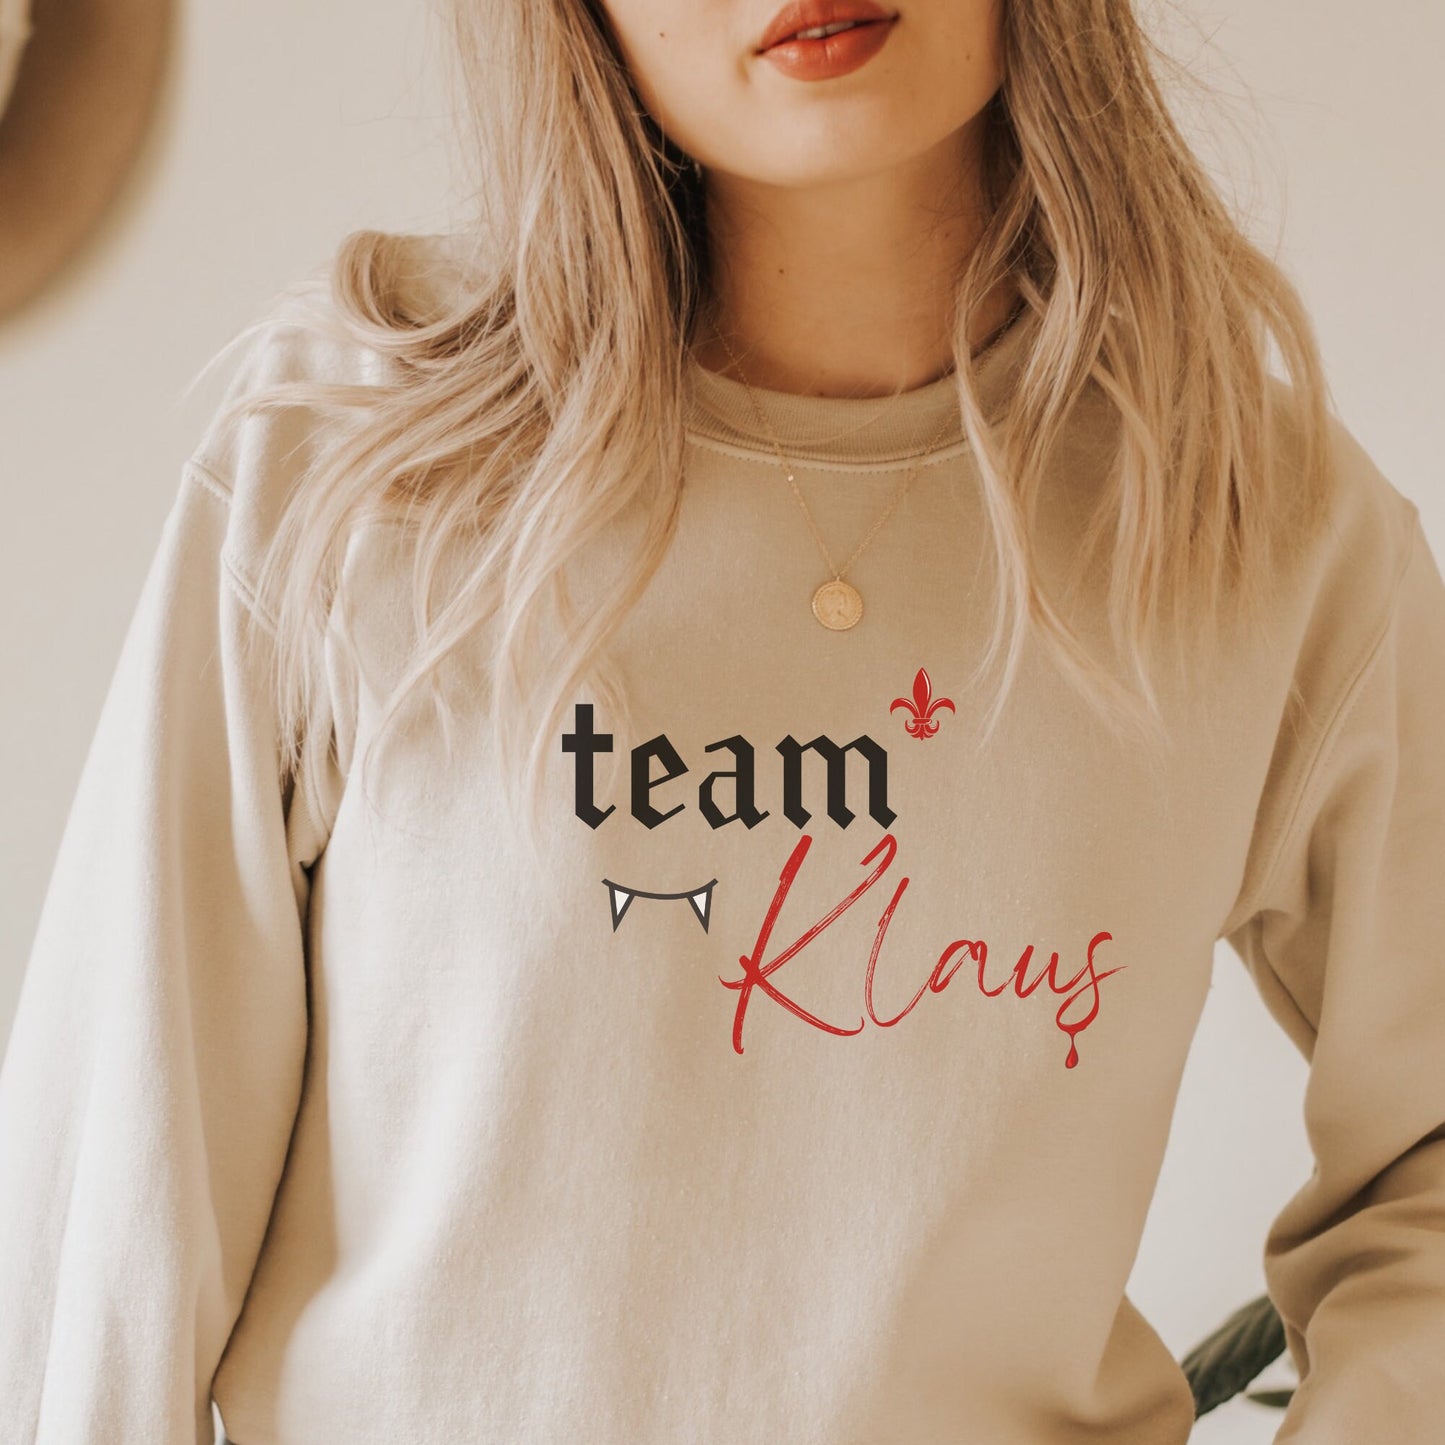 Team Klaus Sweatshirt,  Klaus Mikaleson Sweatshirt, tvd fan gift, The Vampire Diaries Sweater, TVD Fan, TVD xmas gift, The Originals